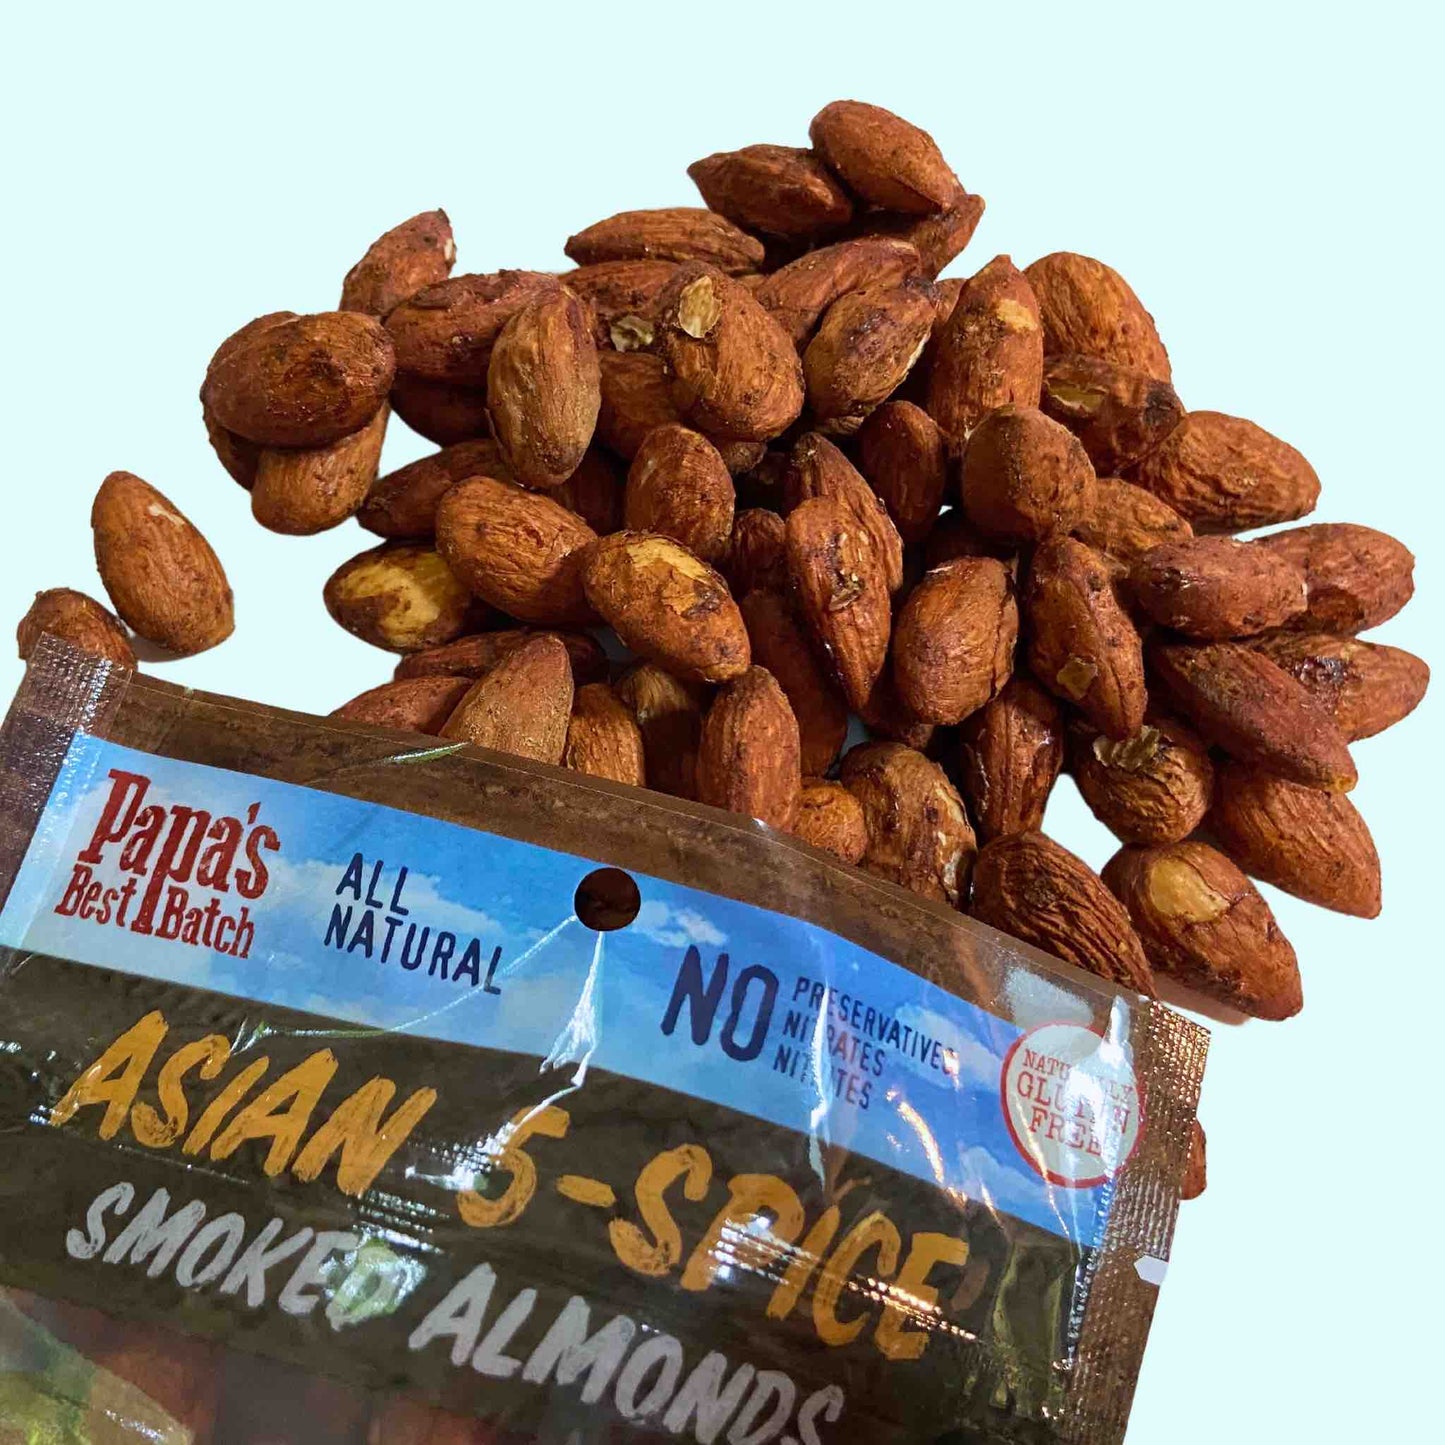 Smoked Almonds Sampler